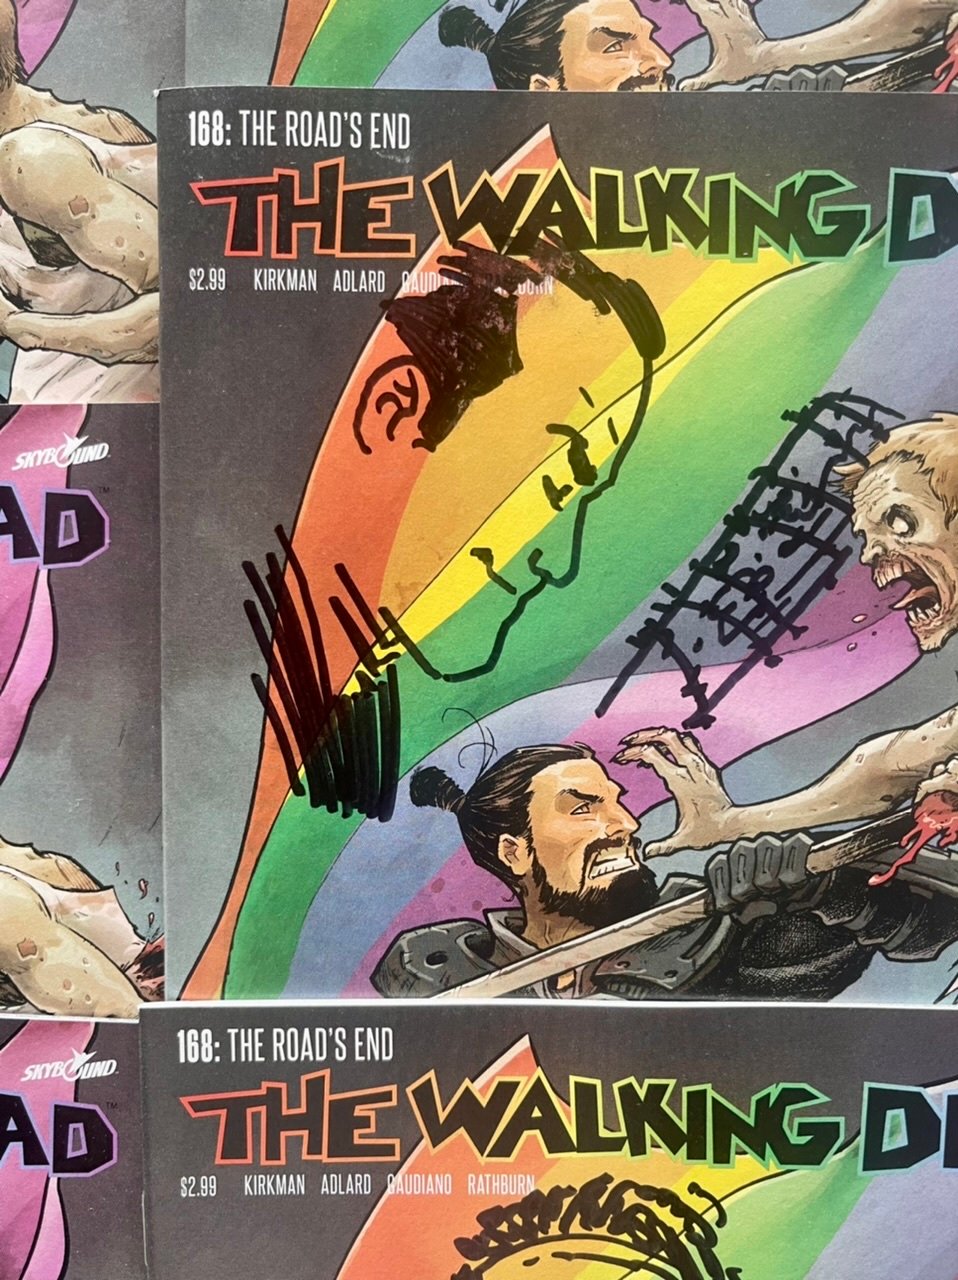 Image of Walking Dead Pride variant cover